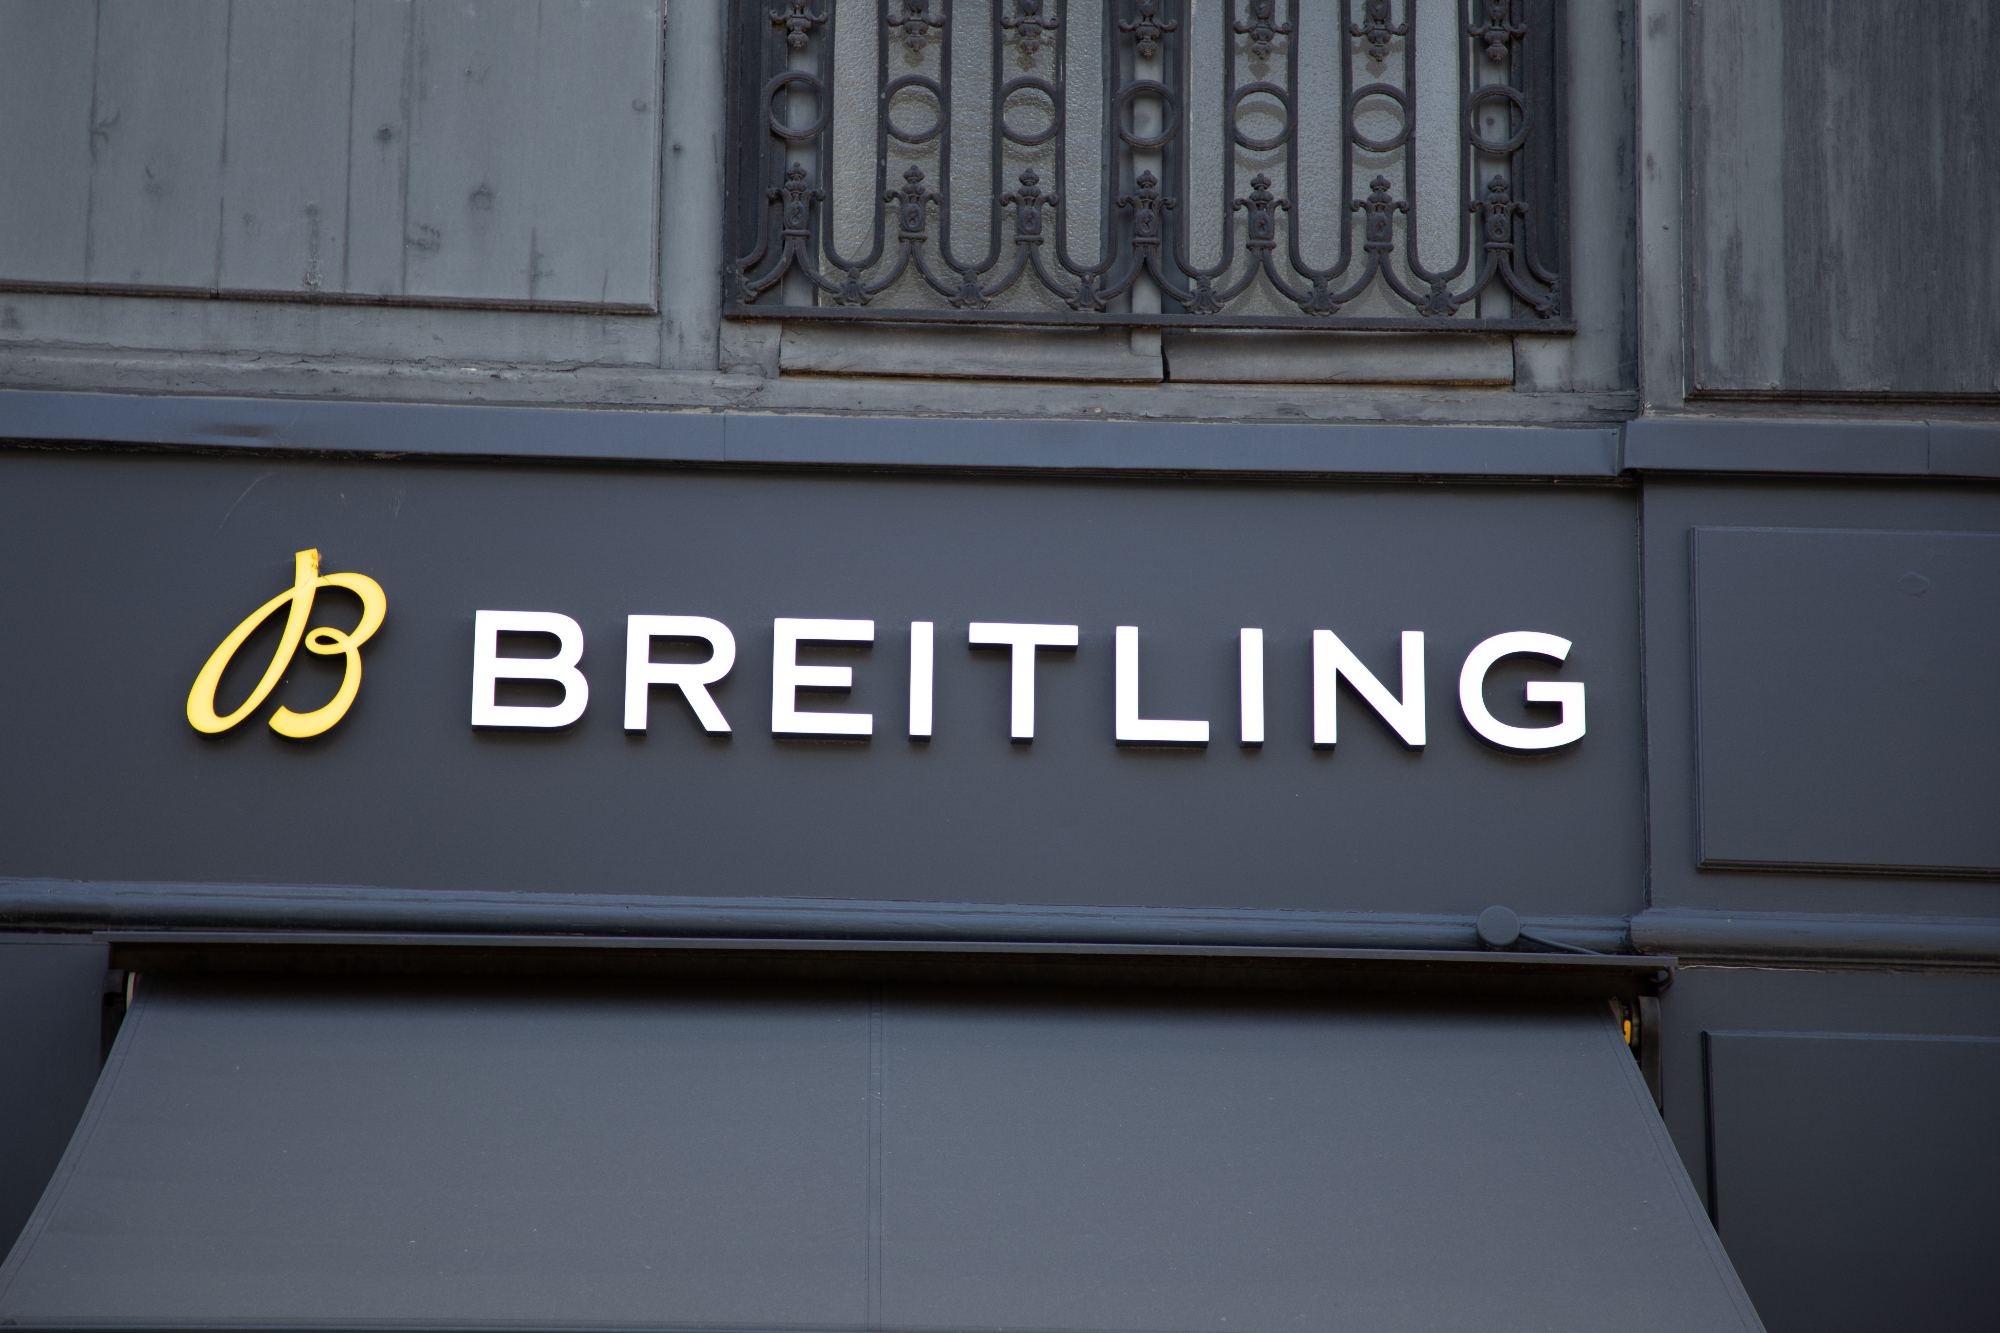 Breitling predstavlja odlično znamko za ročne ure